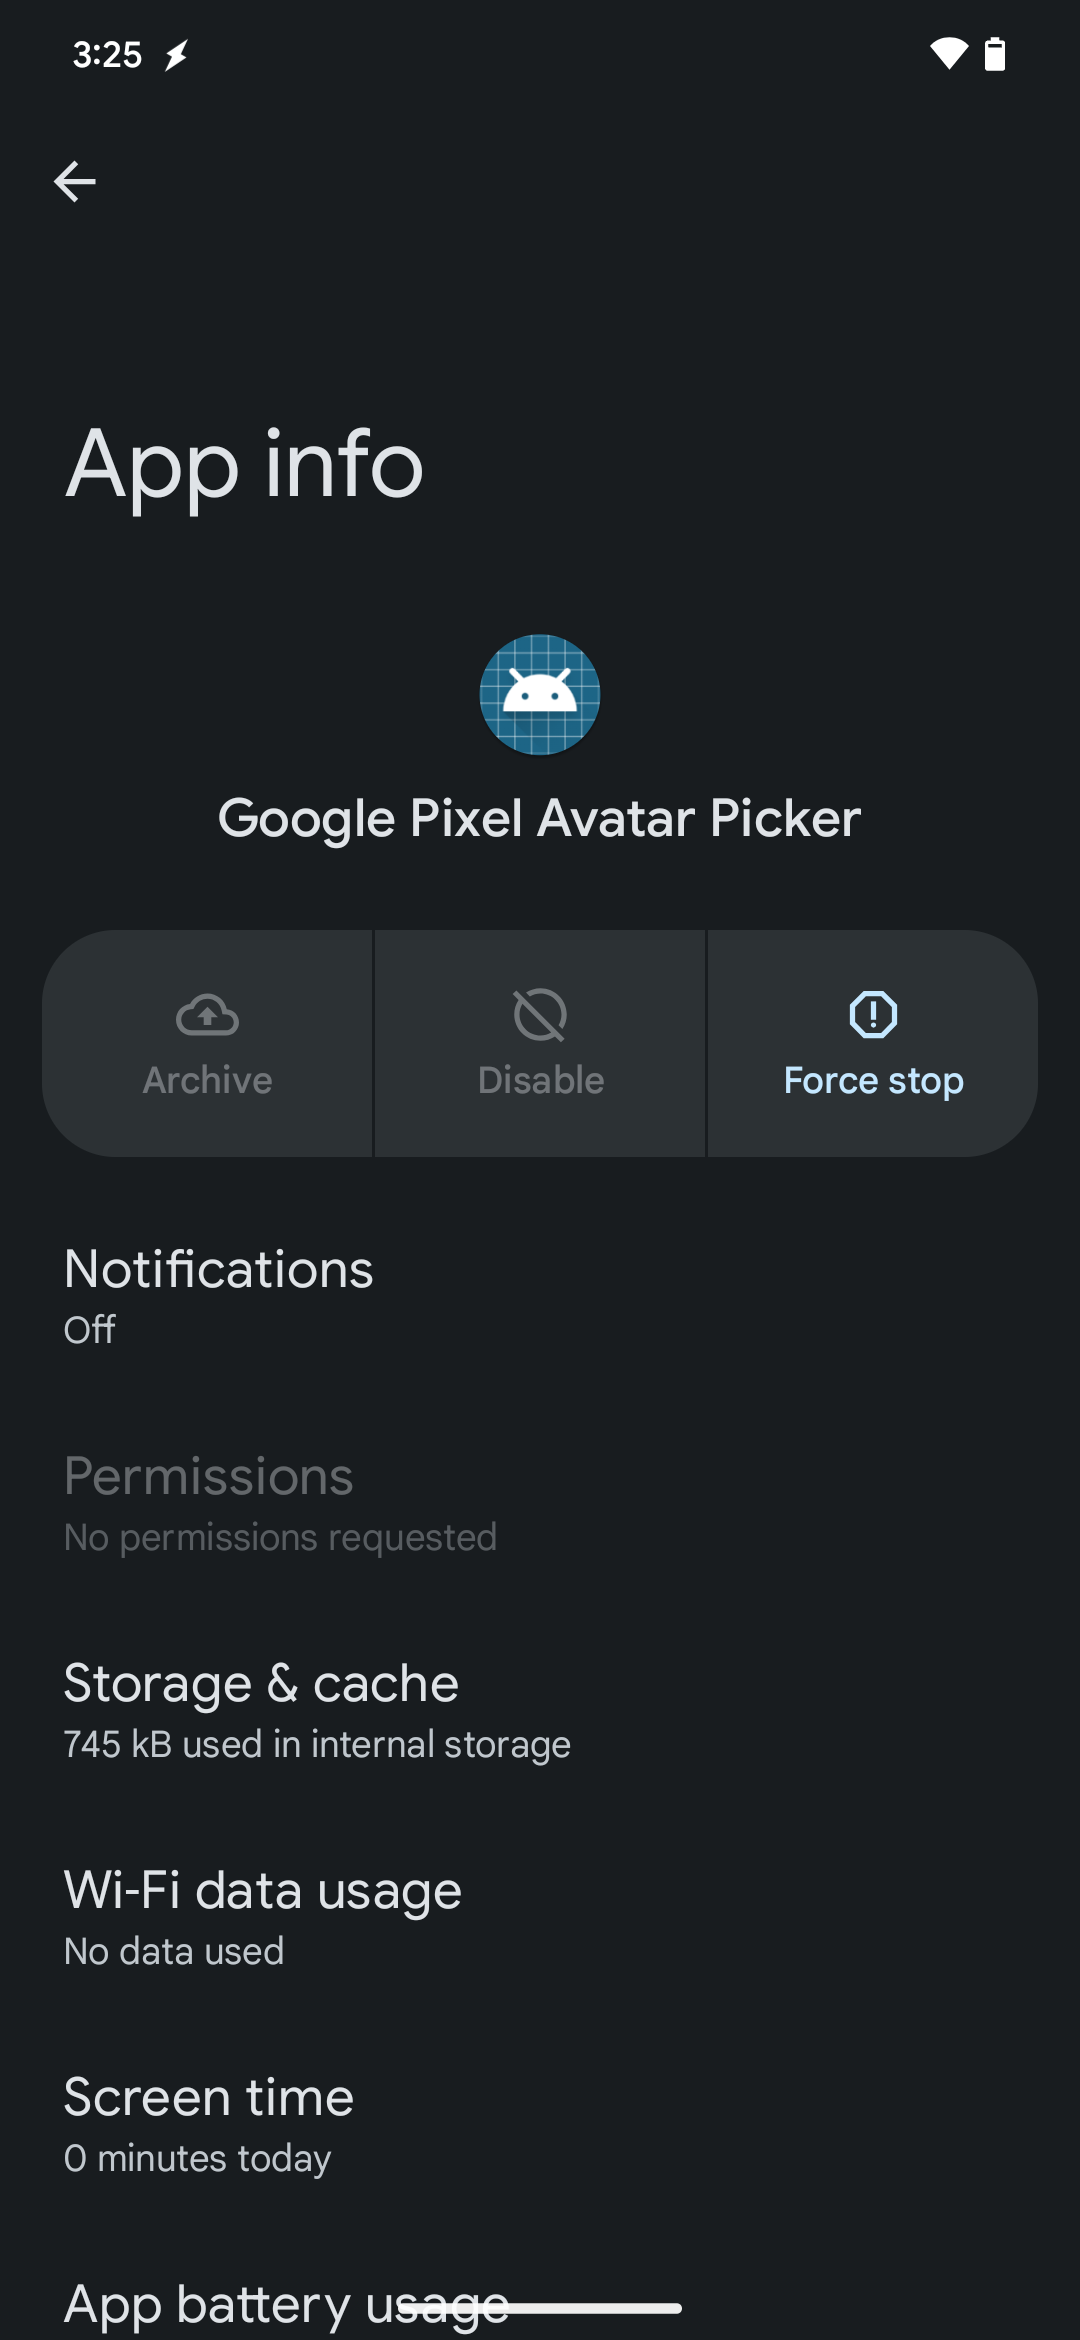 Google Pixel Avatar Picker app